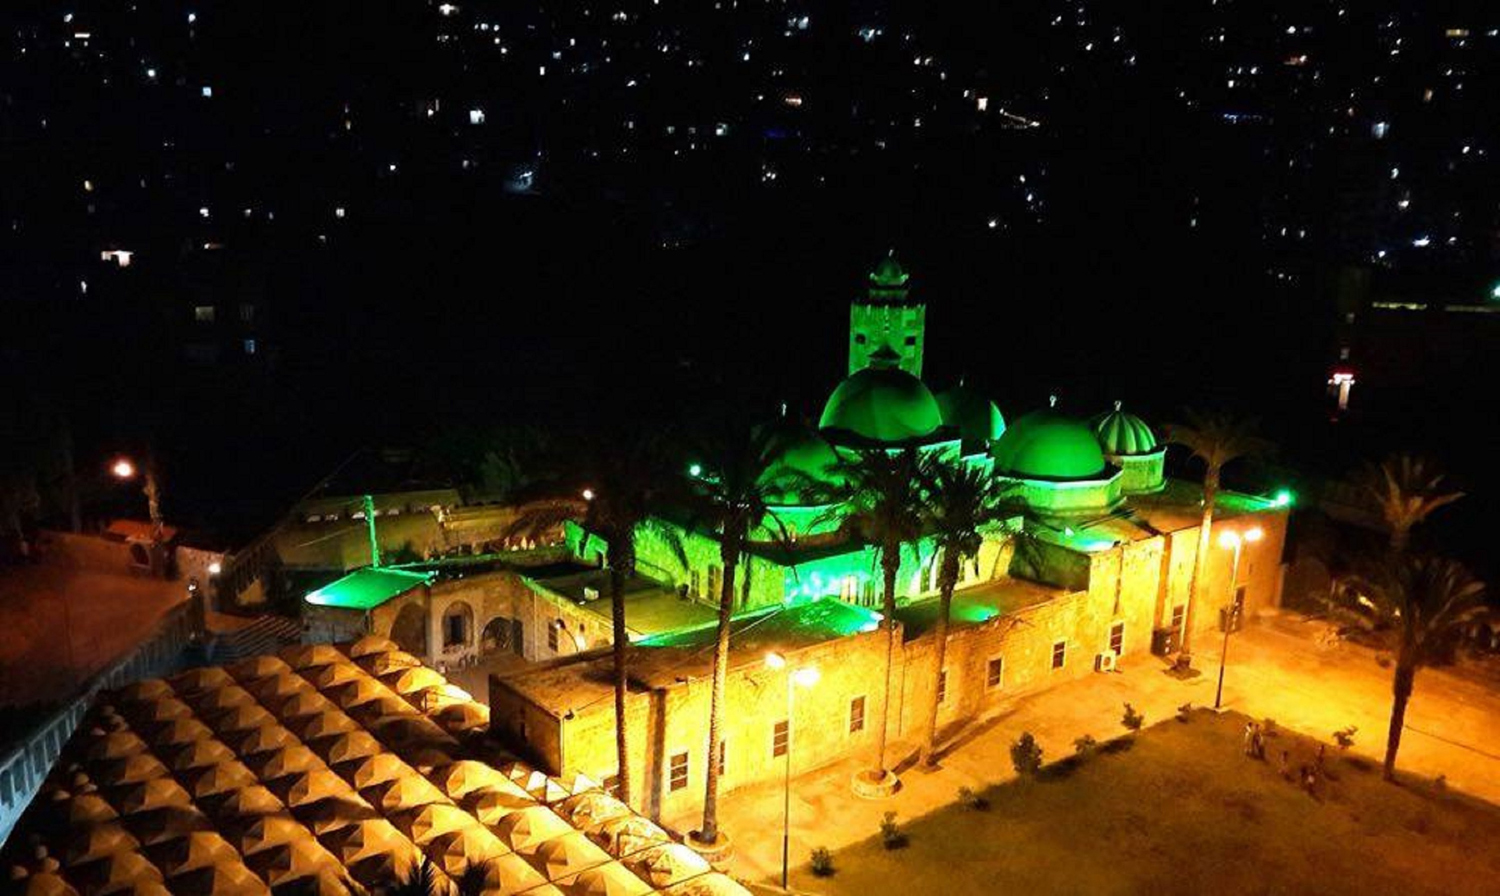 Taynal Mosque, crown jewel of Islamic architecture in Lebanon